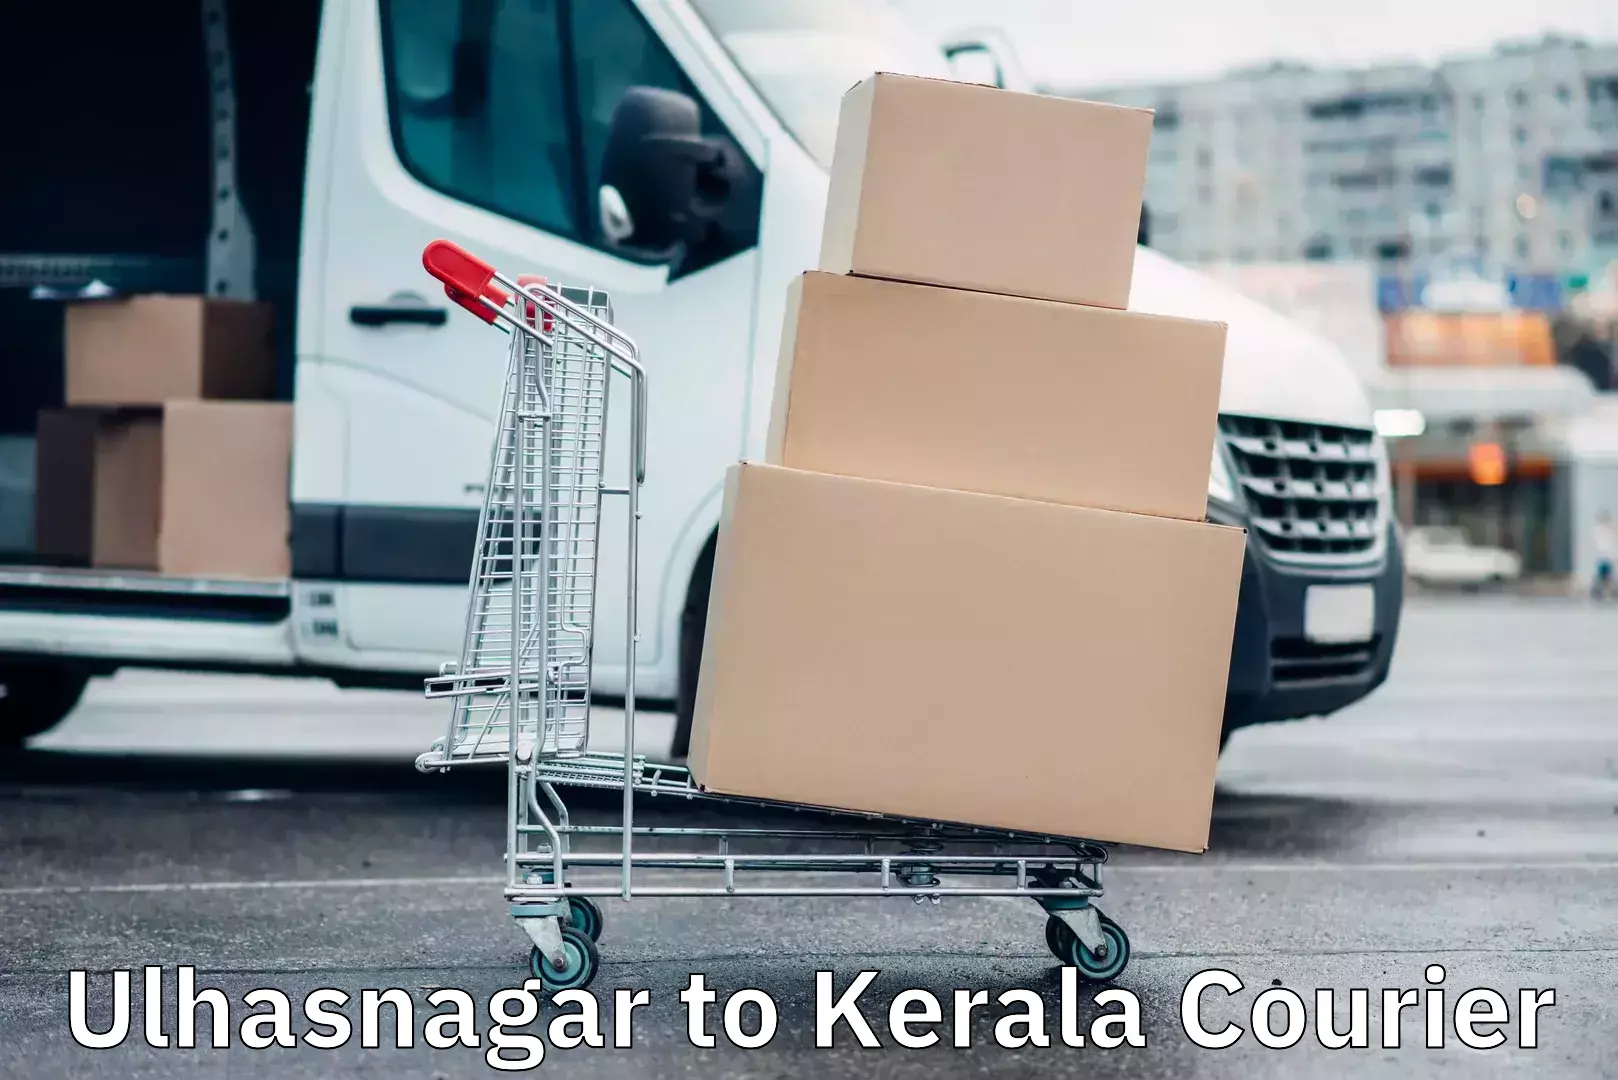 Courier service comparison Ulhasnagar to Kerala